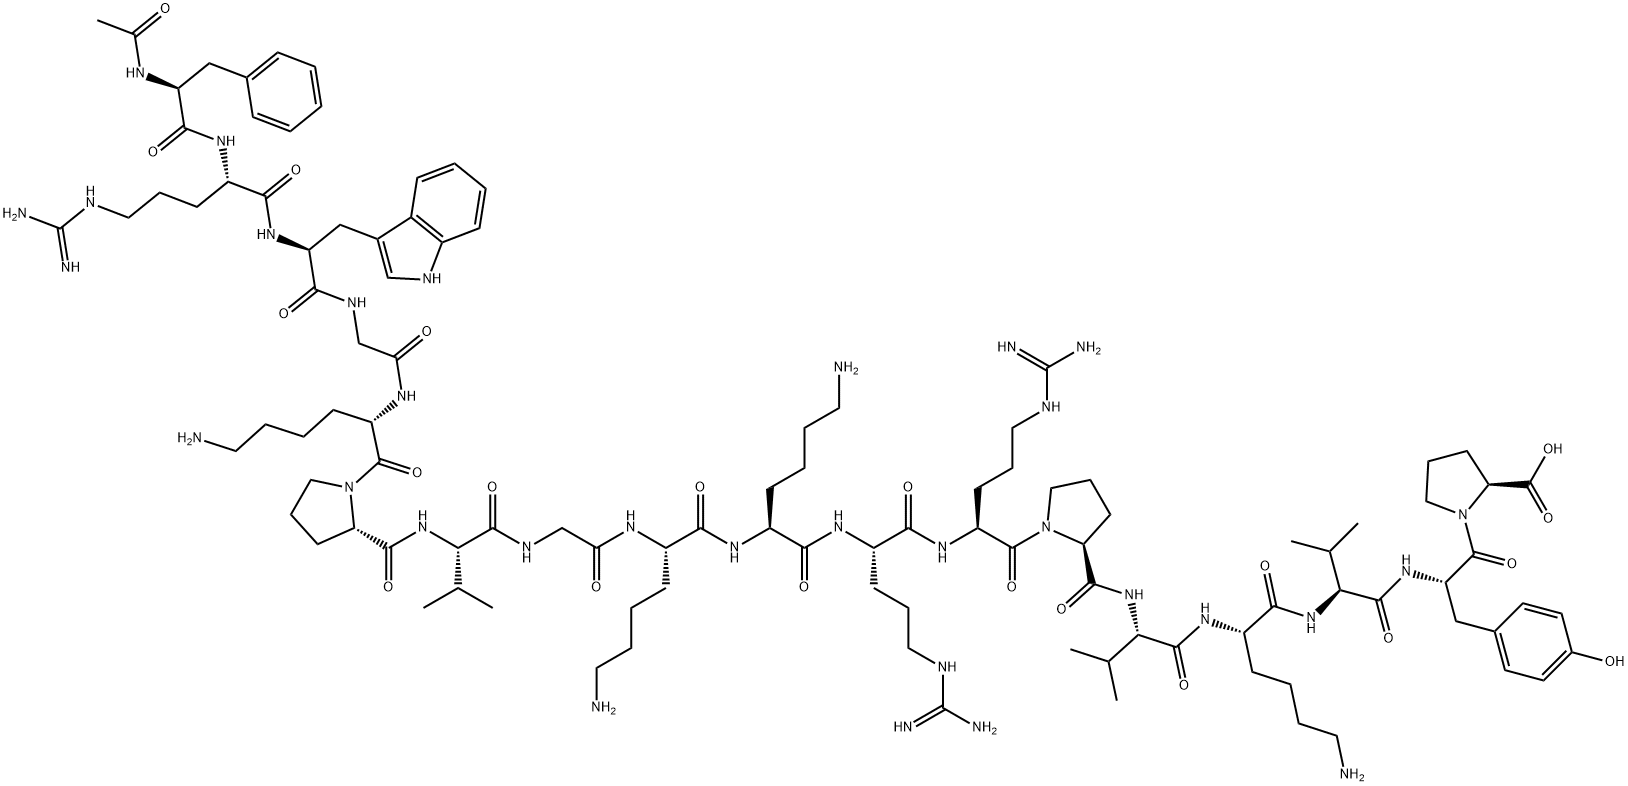 Acetyl-ACTH (7-24) (human, bovine, rat) Structure